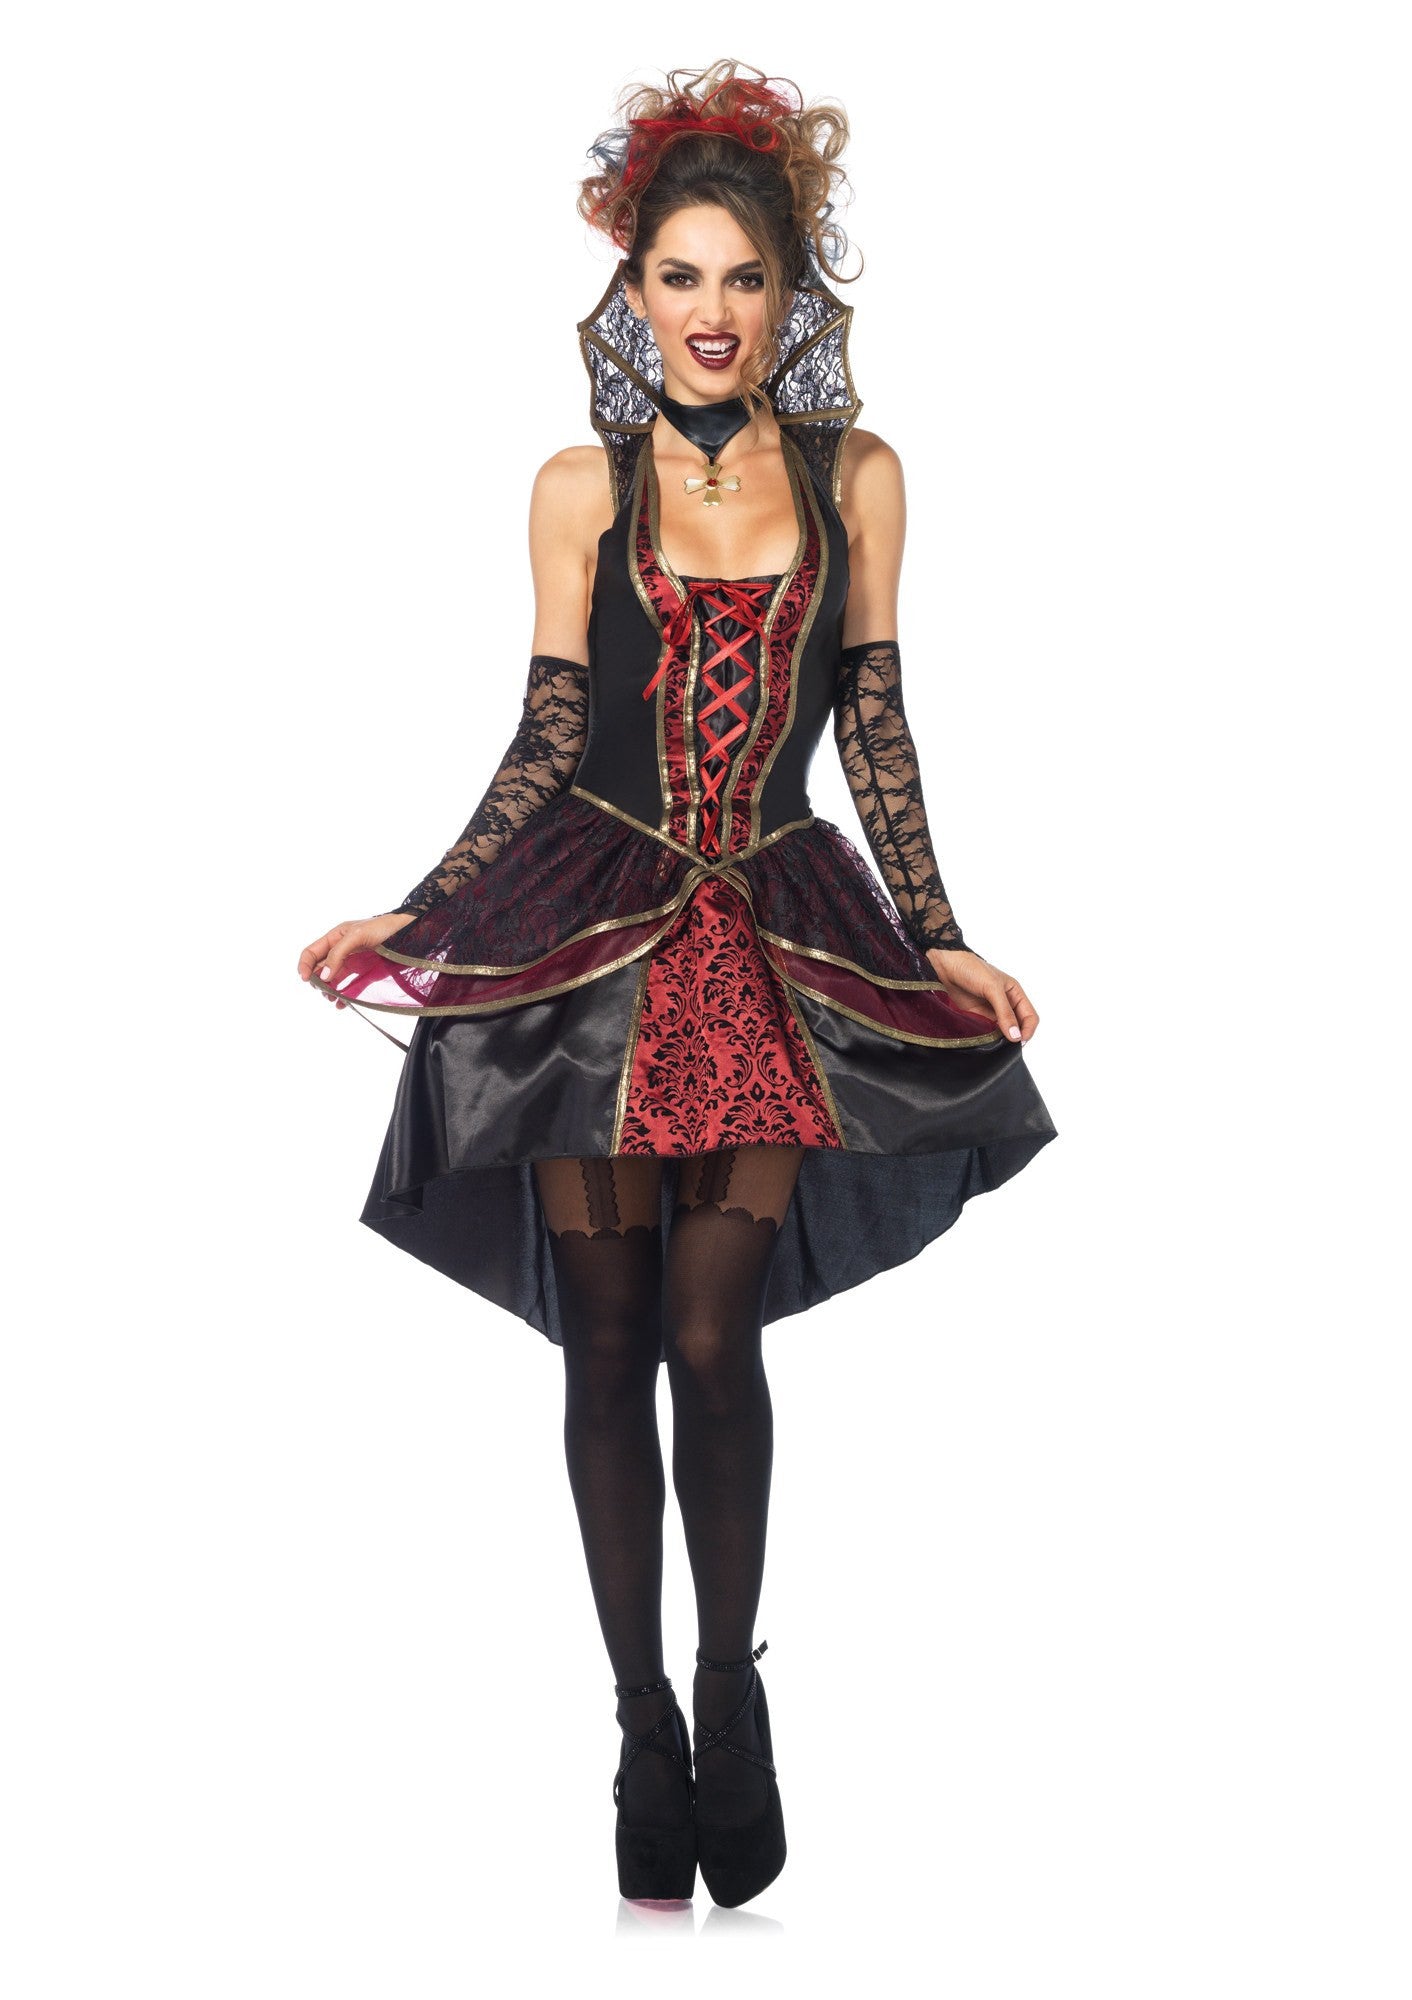 Costume - Vampire Queen Costume